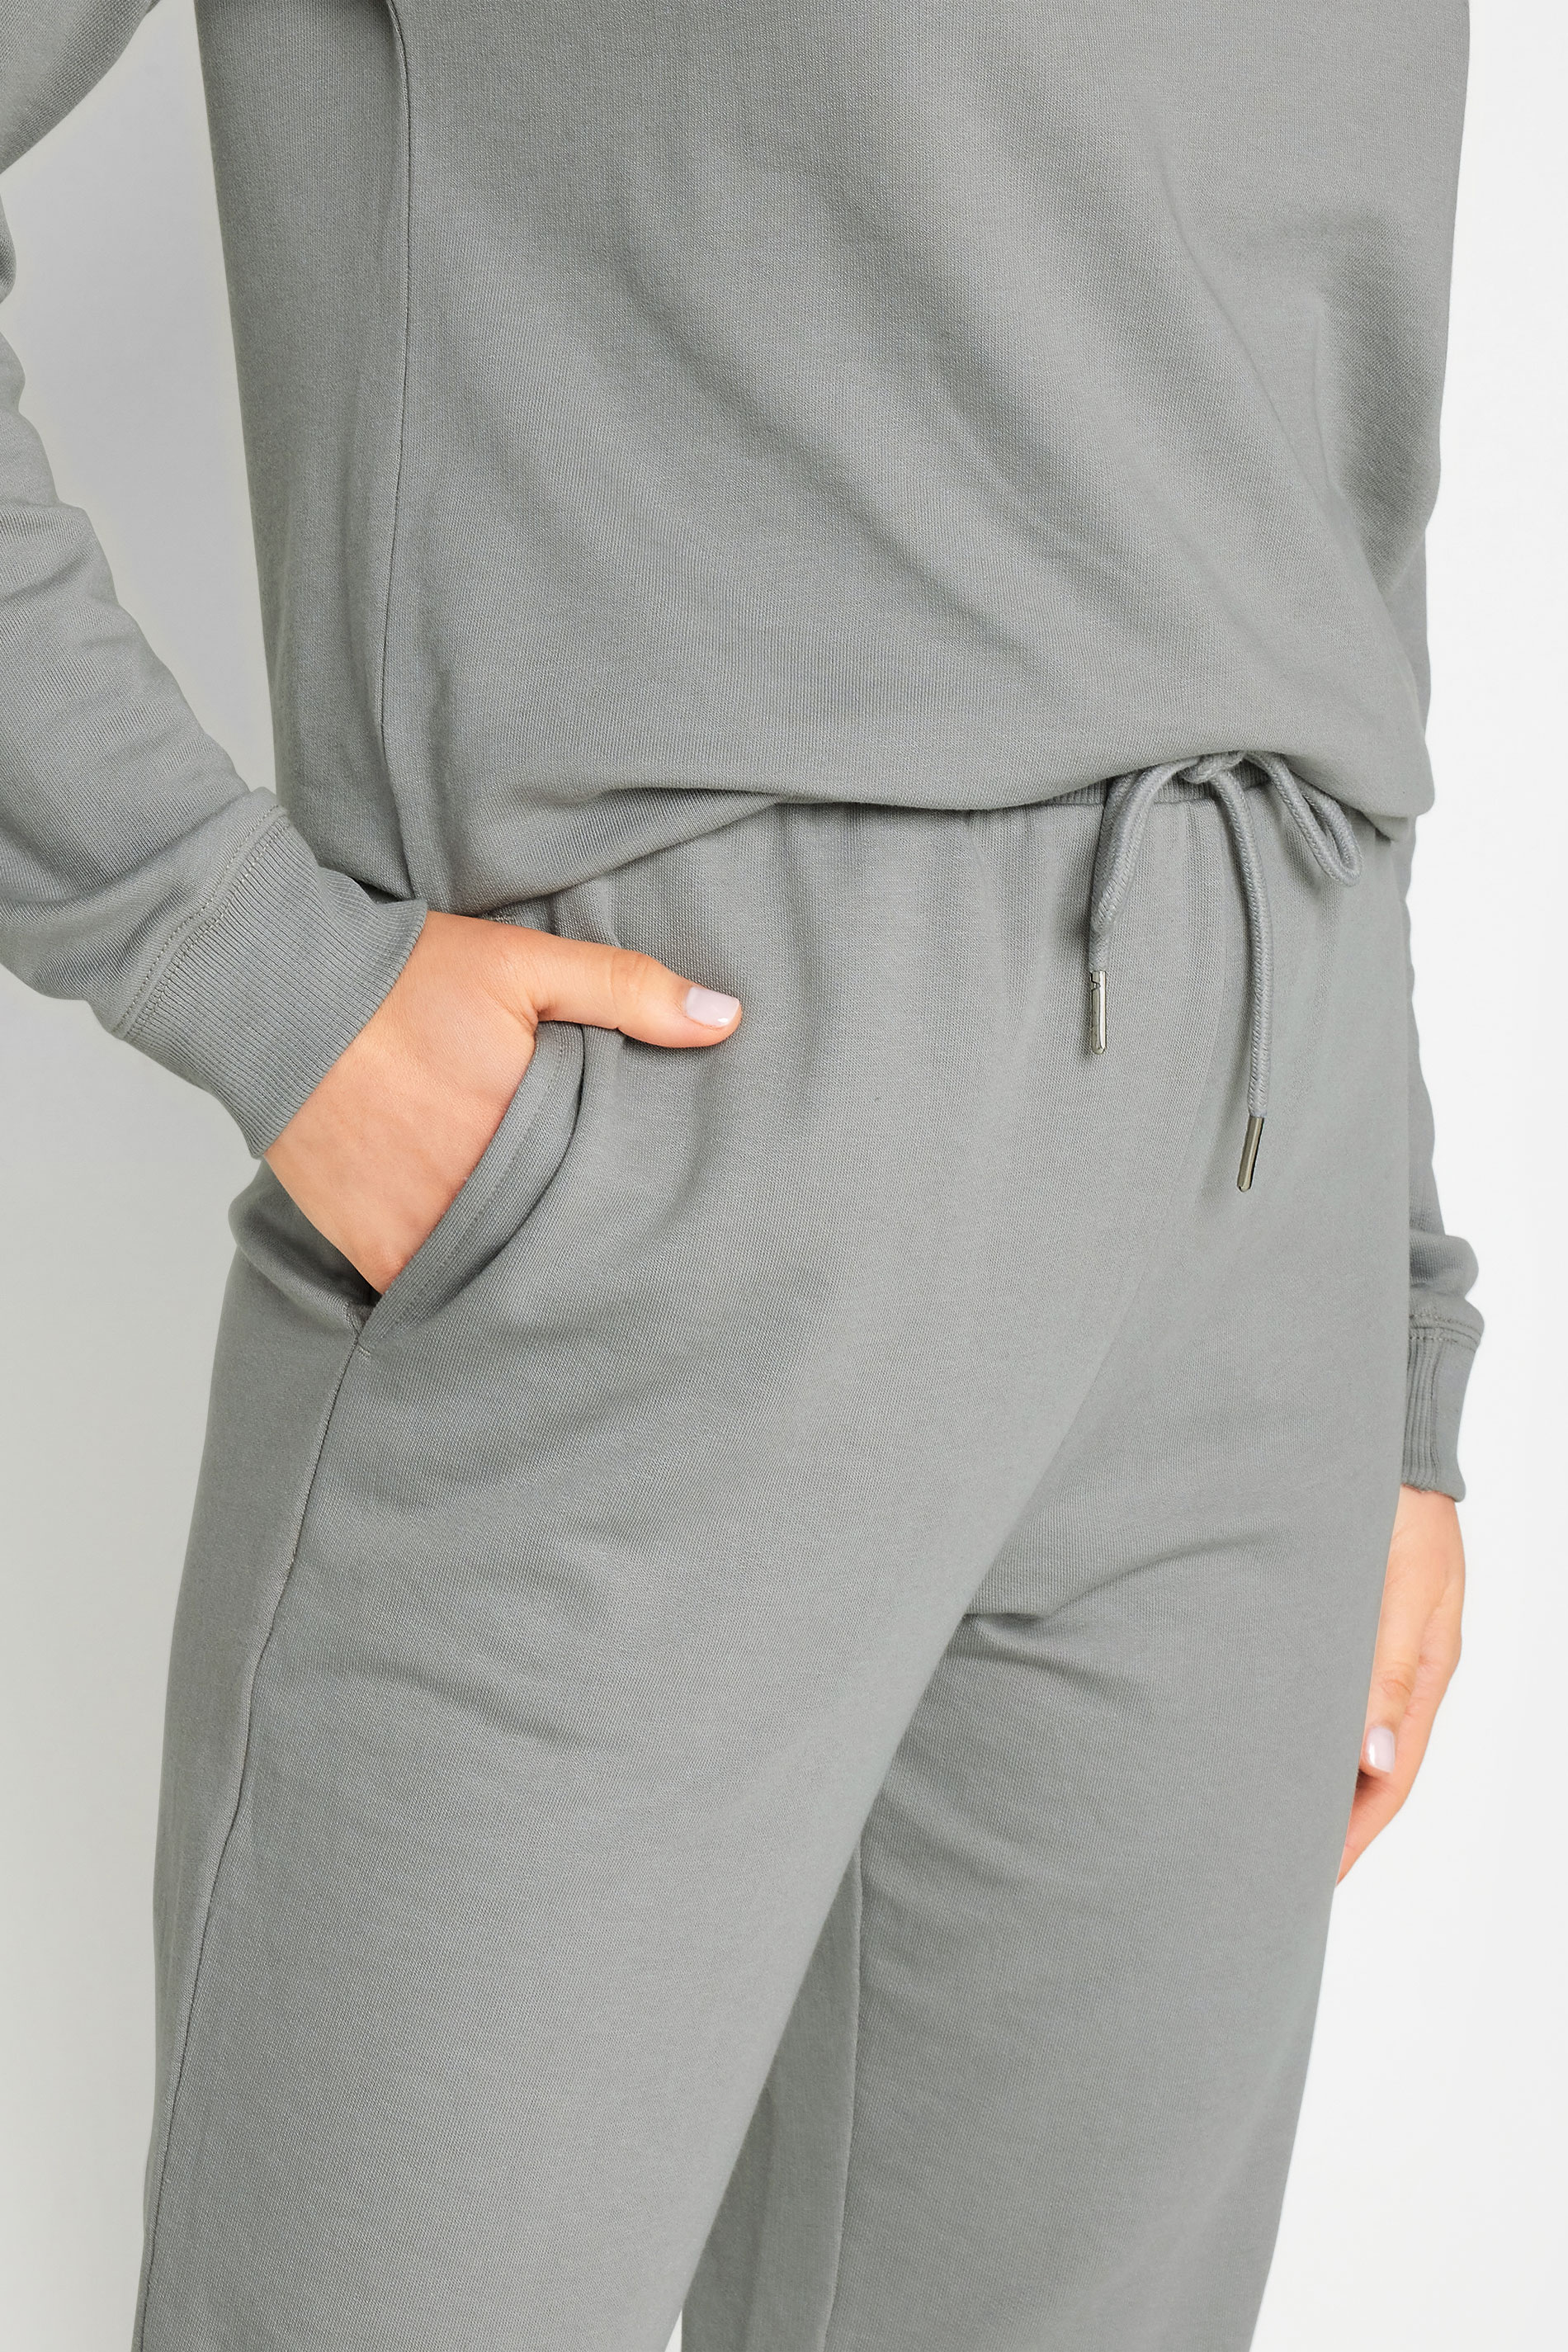 LTS Tall Women's Grey Cuffed Utility Trousers